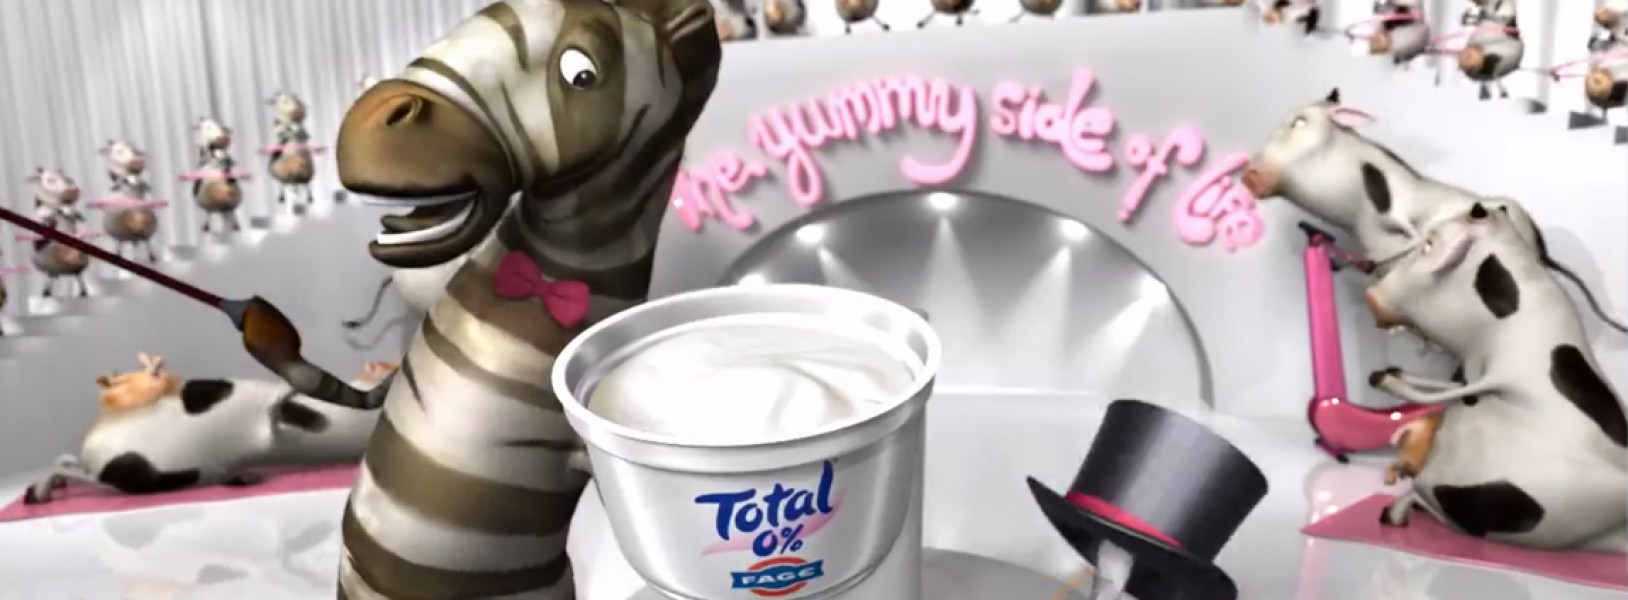 Total Greek Yoghurt: Case Study